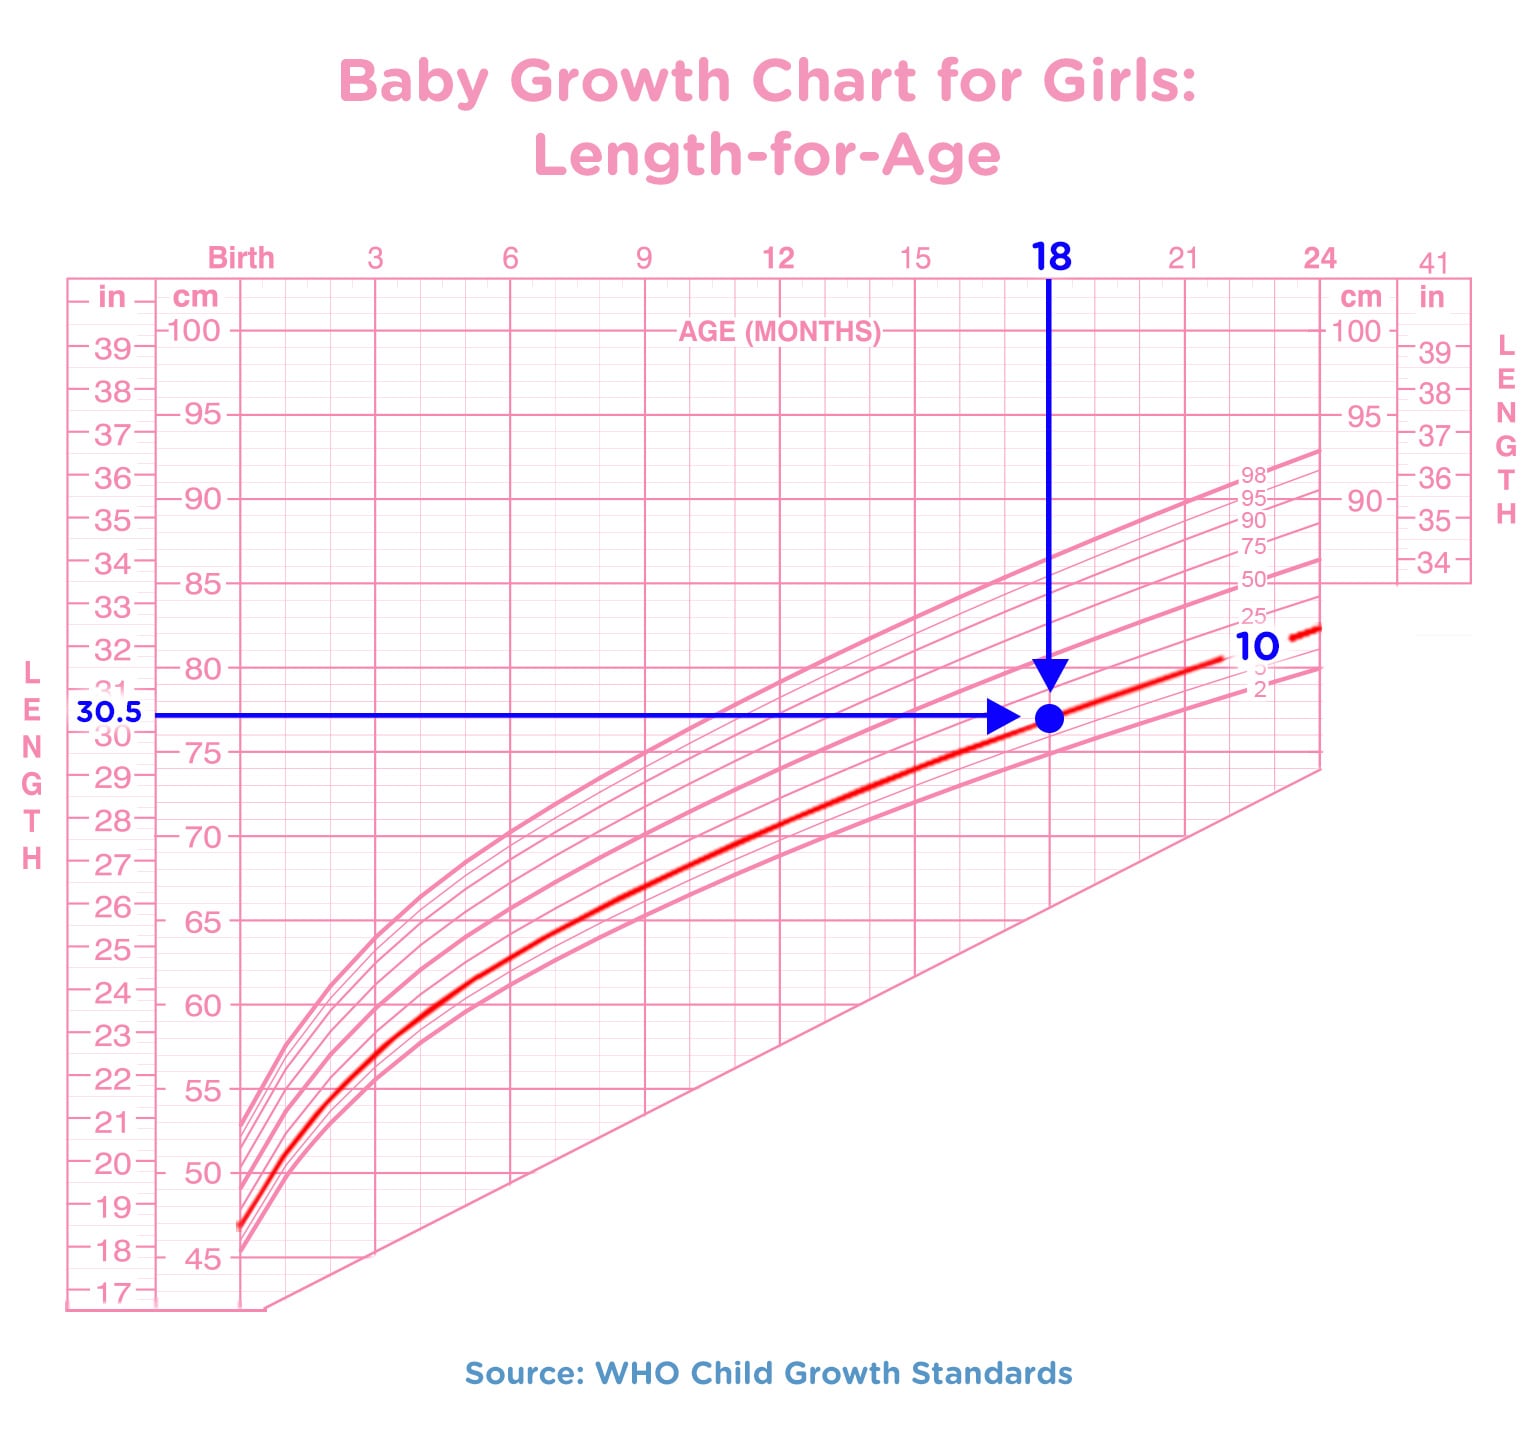 Unborn Baby Weight Chart Uk